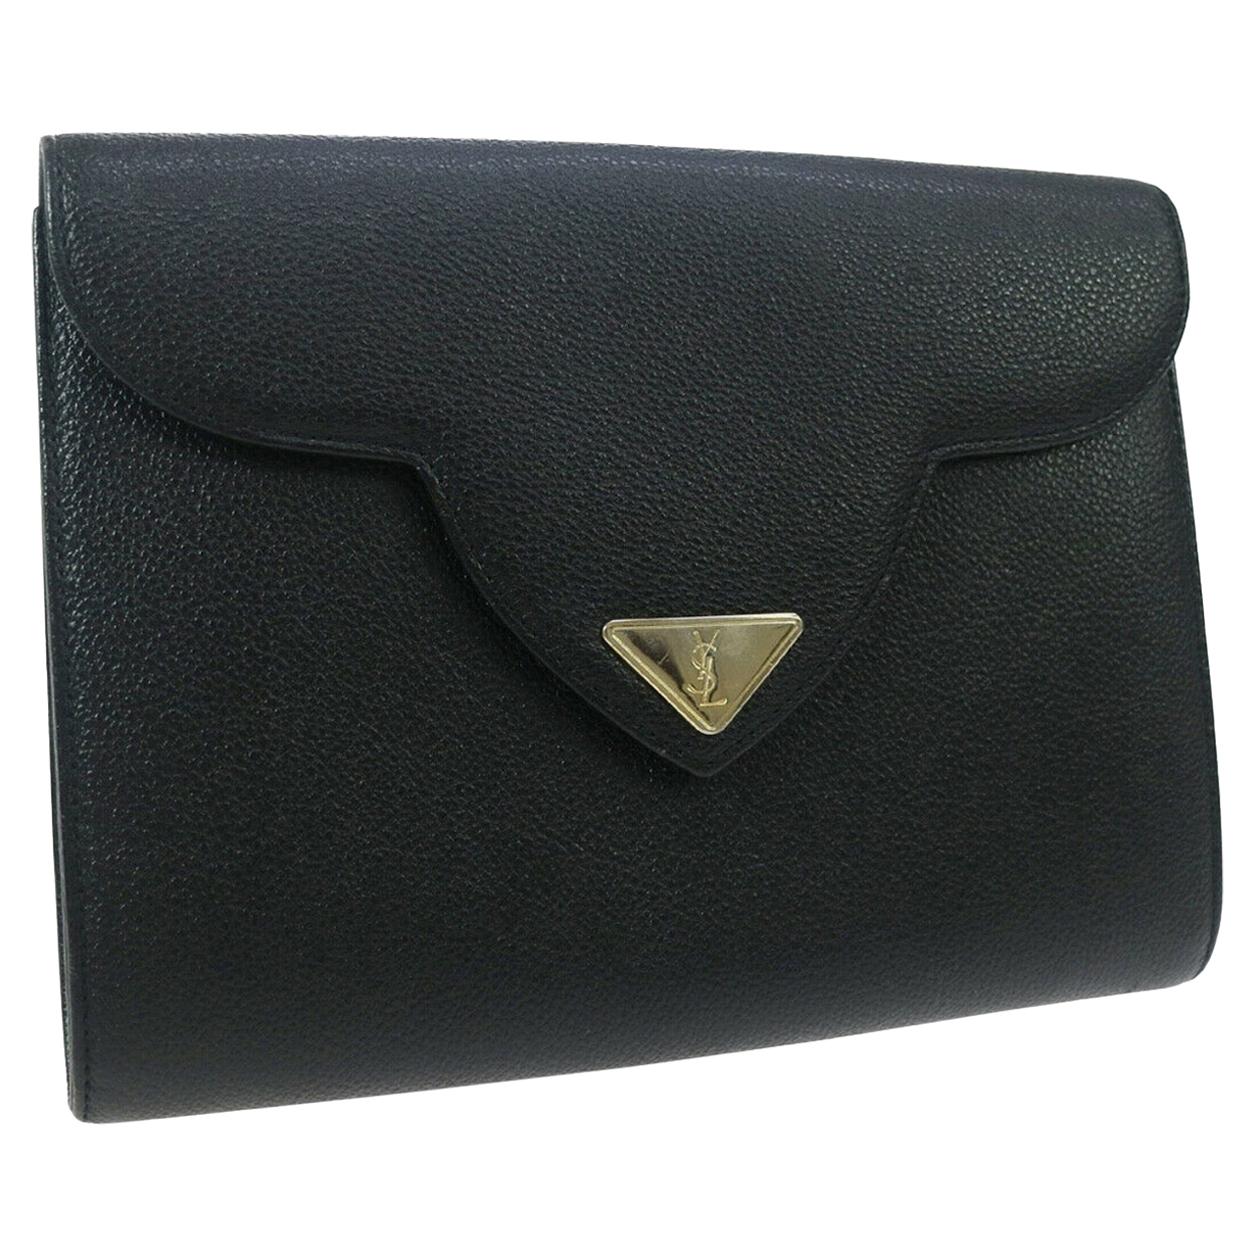 Yves Saint Laurent Black Leather Gold Logo Envelope Evening Flap Clutch Bag